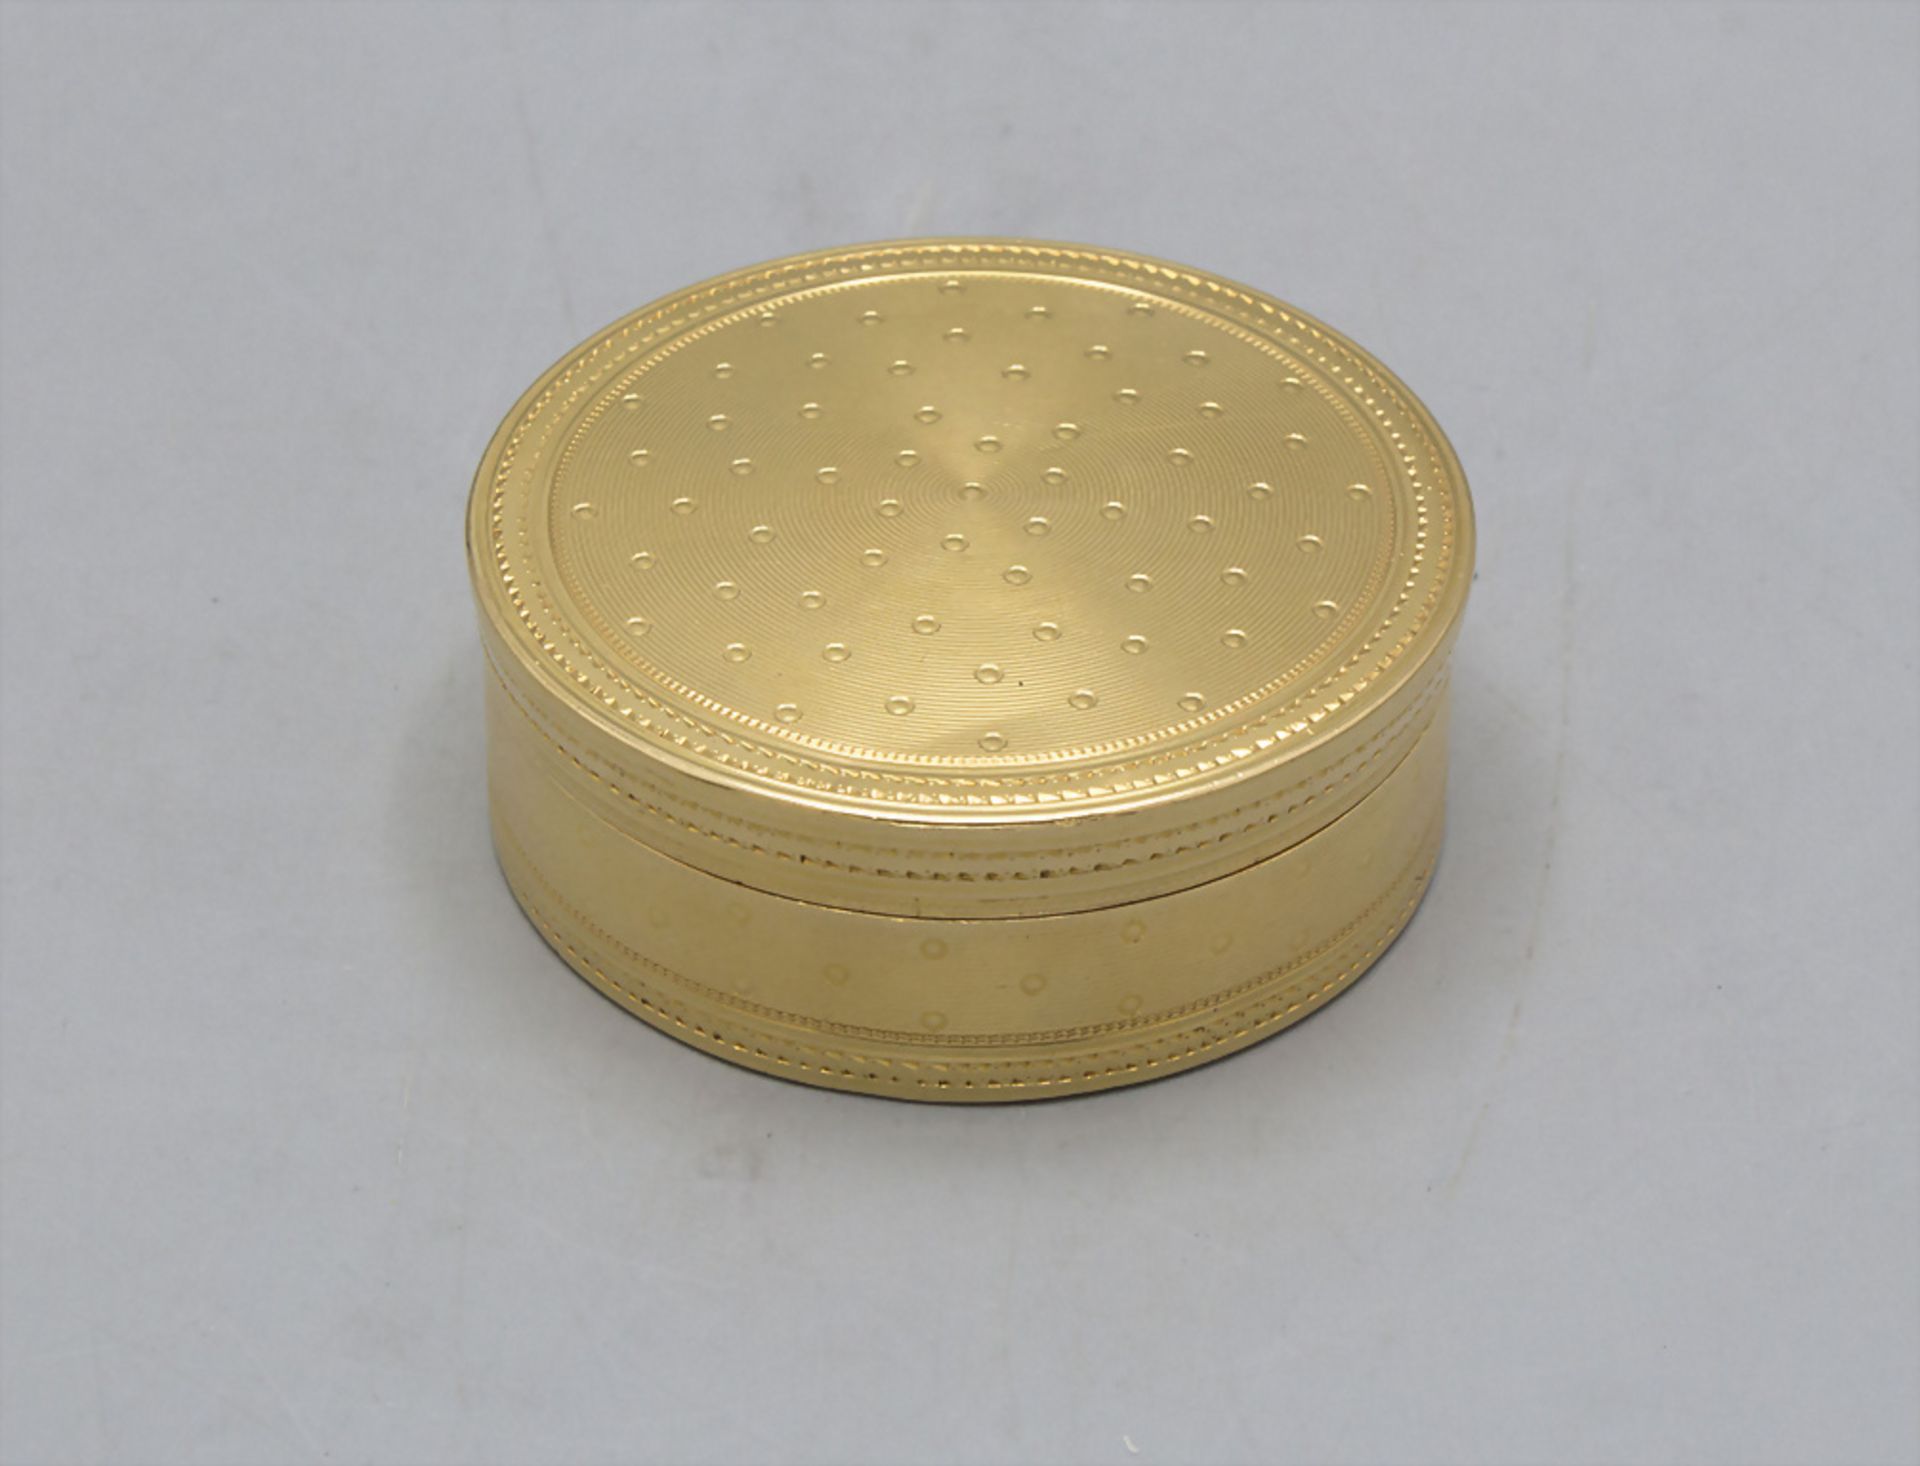 Runde Tabatiere / Schnupftabakdose / An 18 ct snuff box, Pierre Lucien Joitteau, Paris, 1783-1789 - Bild 5 aus 7